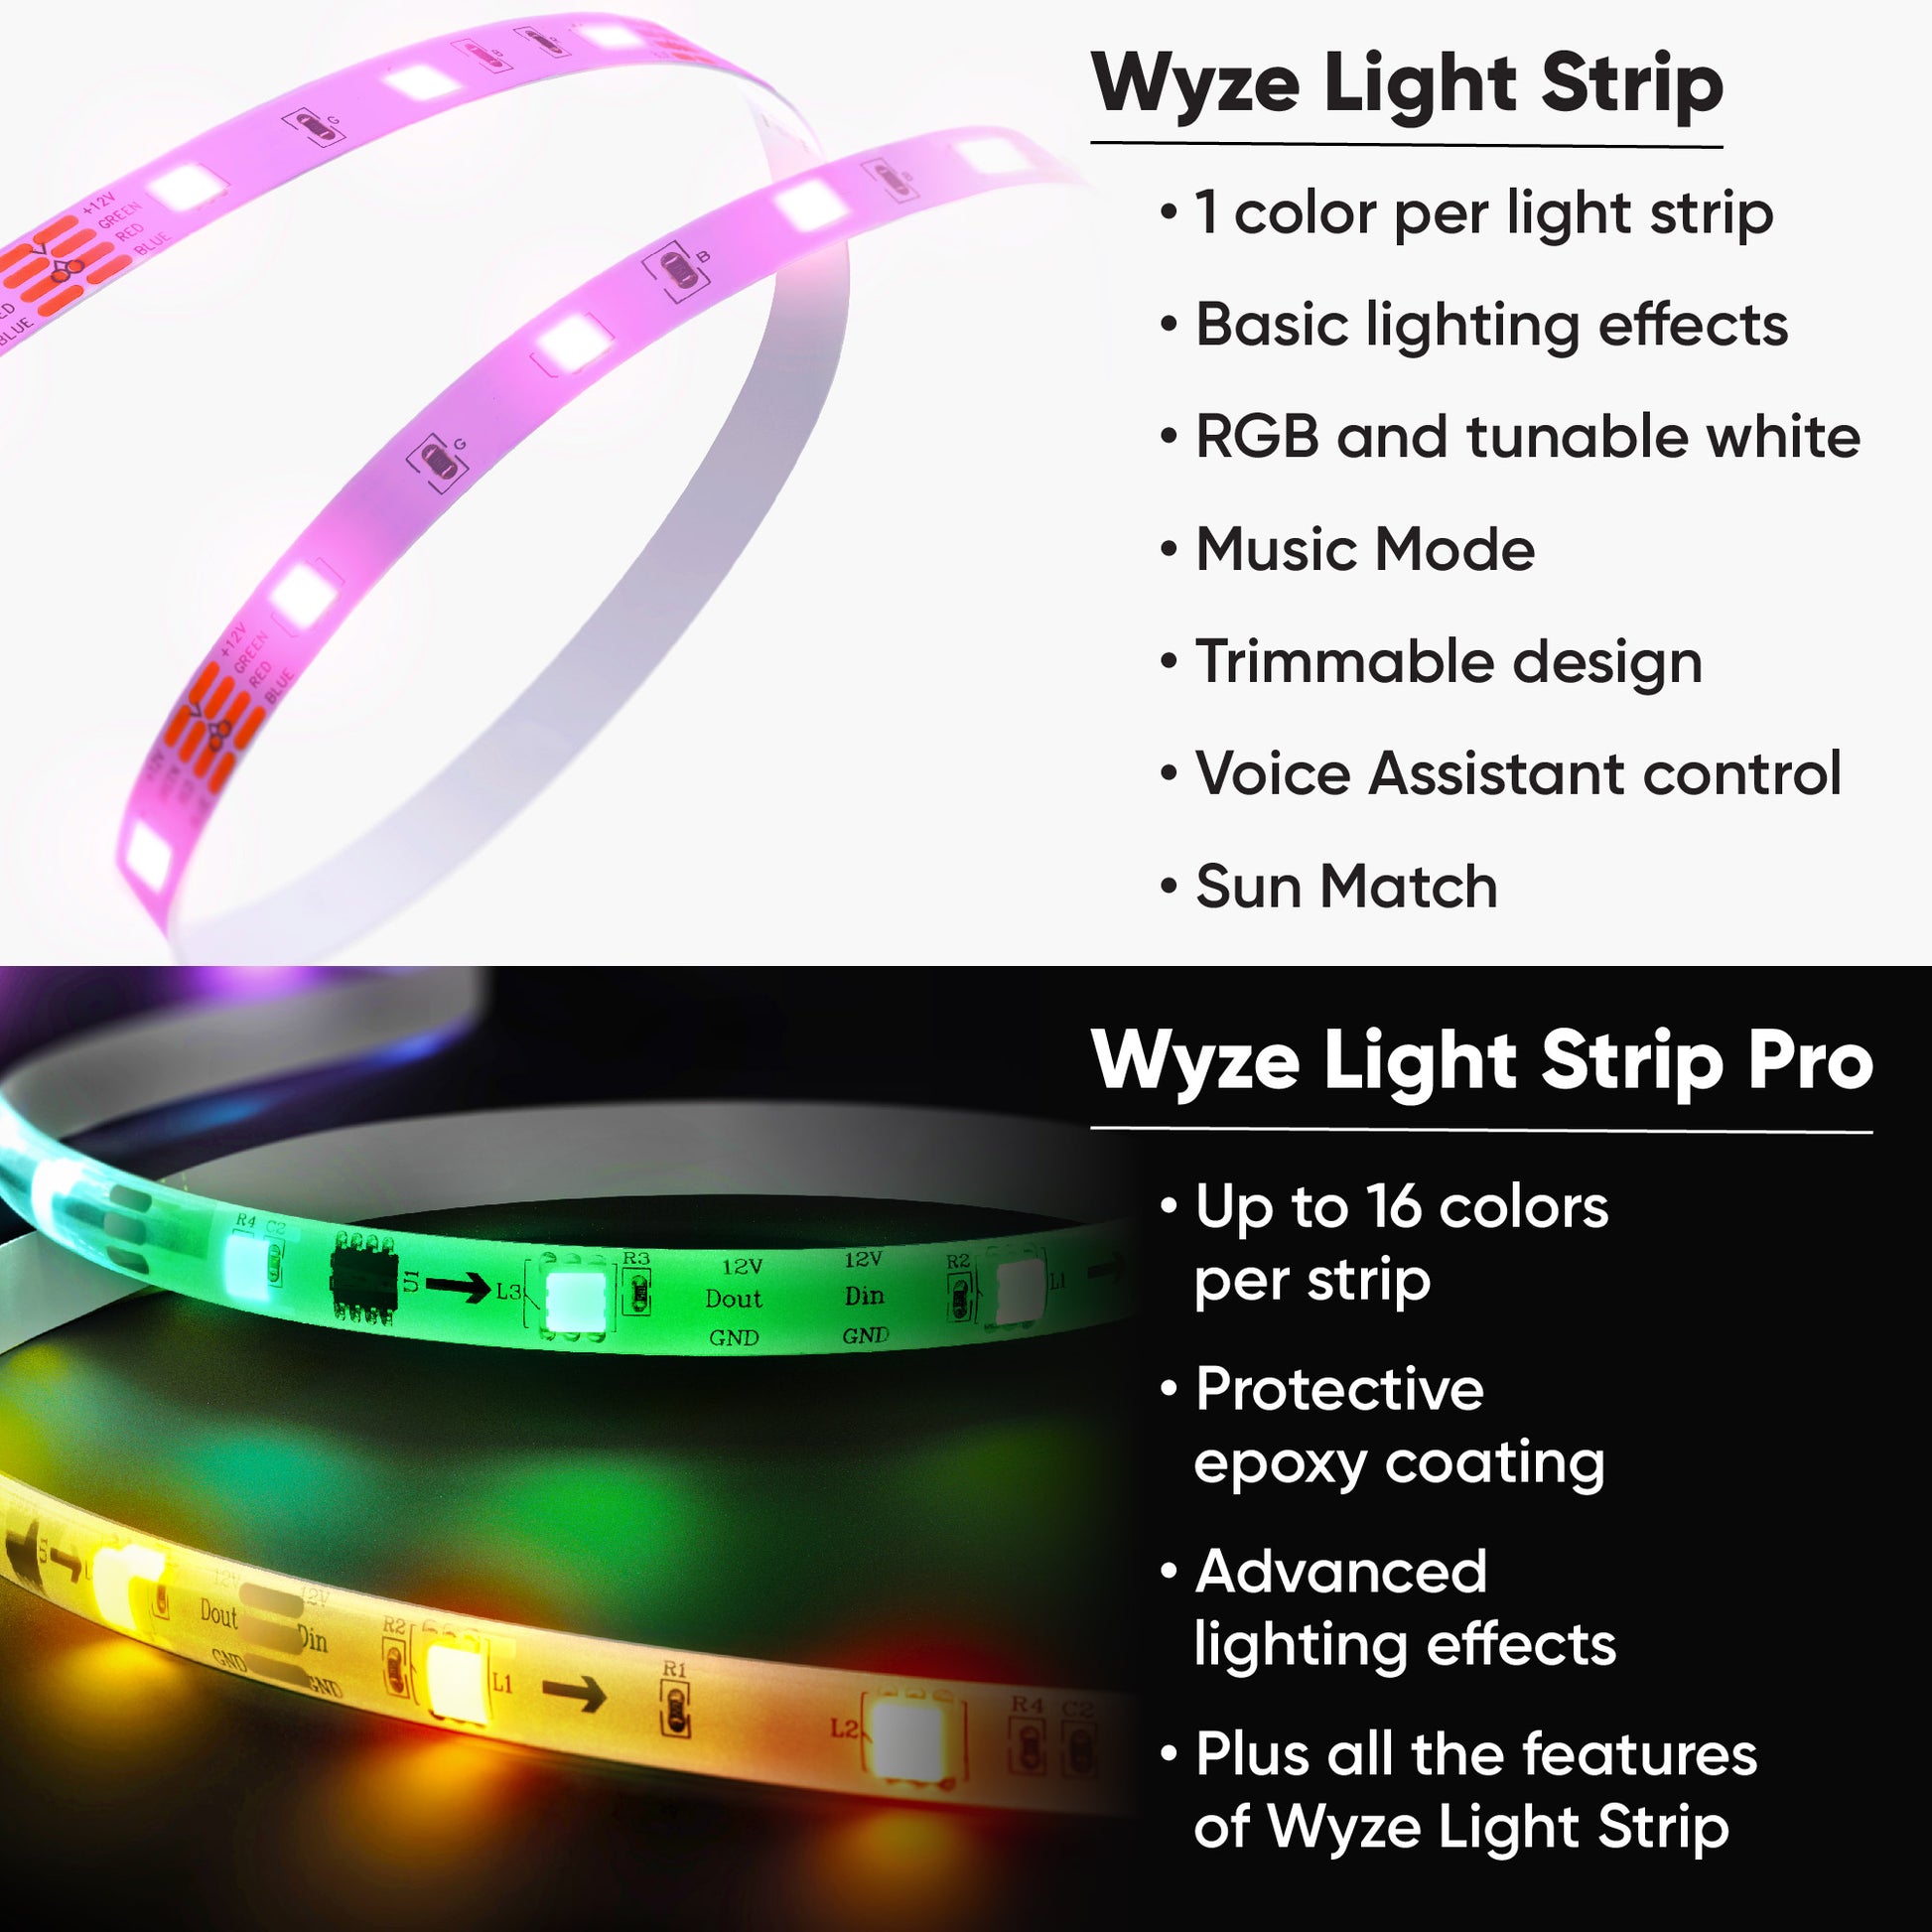 A comparison chart between Wyze Light Strip and Wyze Light Strip Pro.